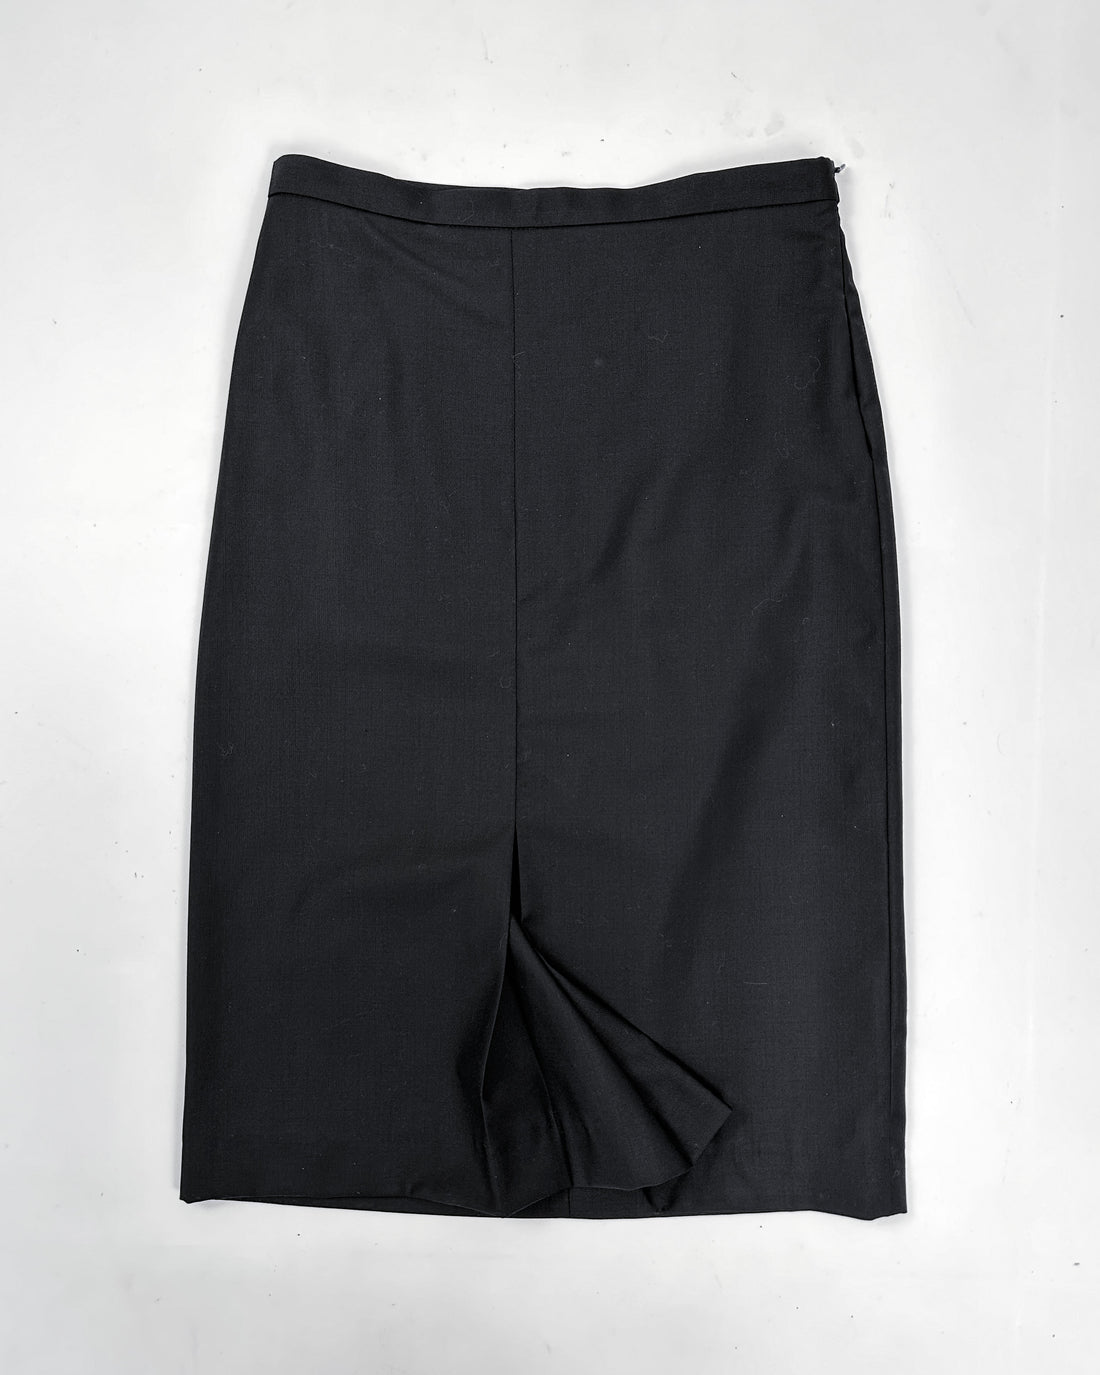 Bottega Veneta Uniform Black Pencil Skirt 1990's